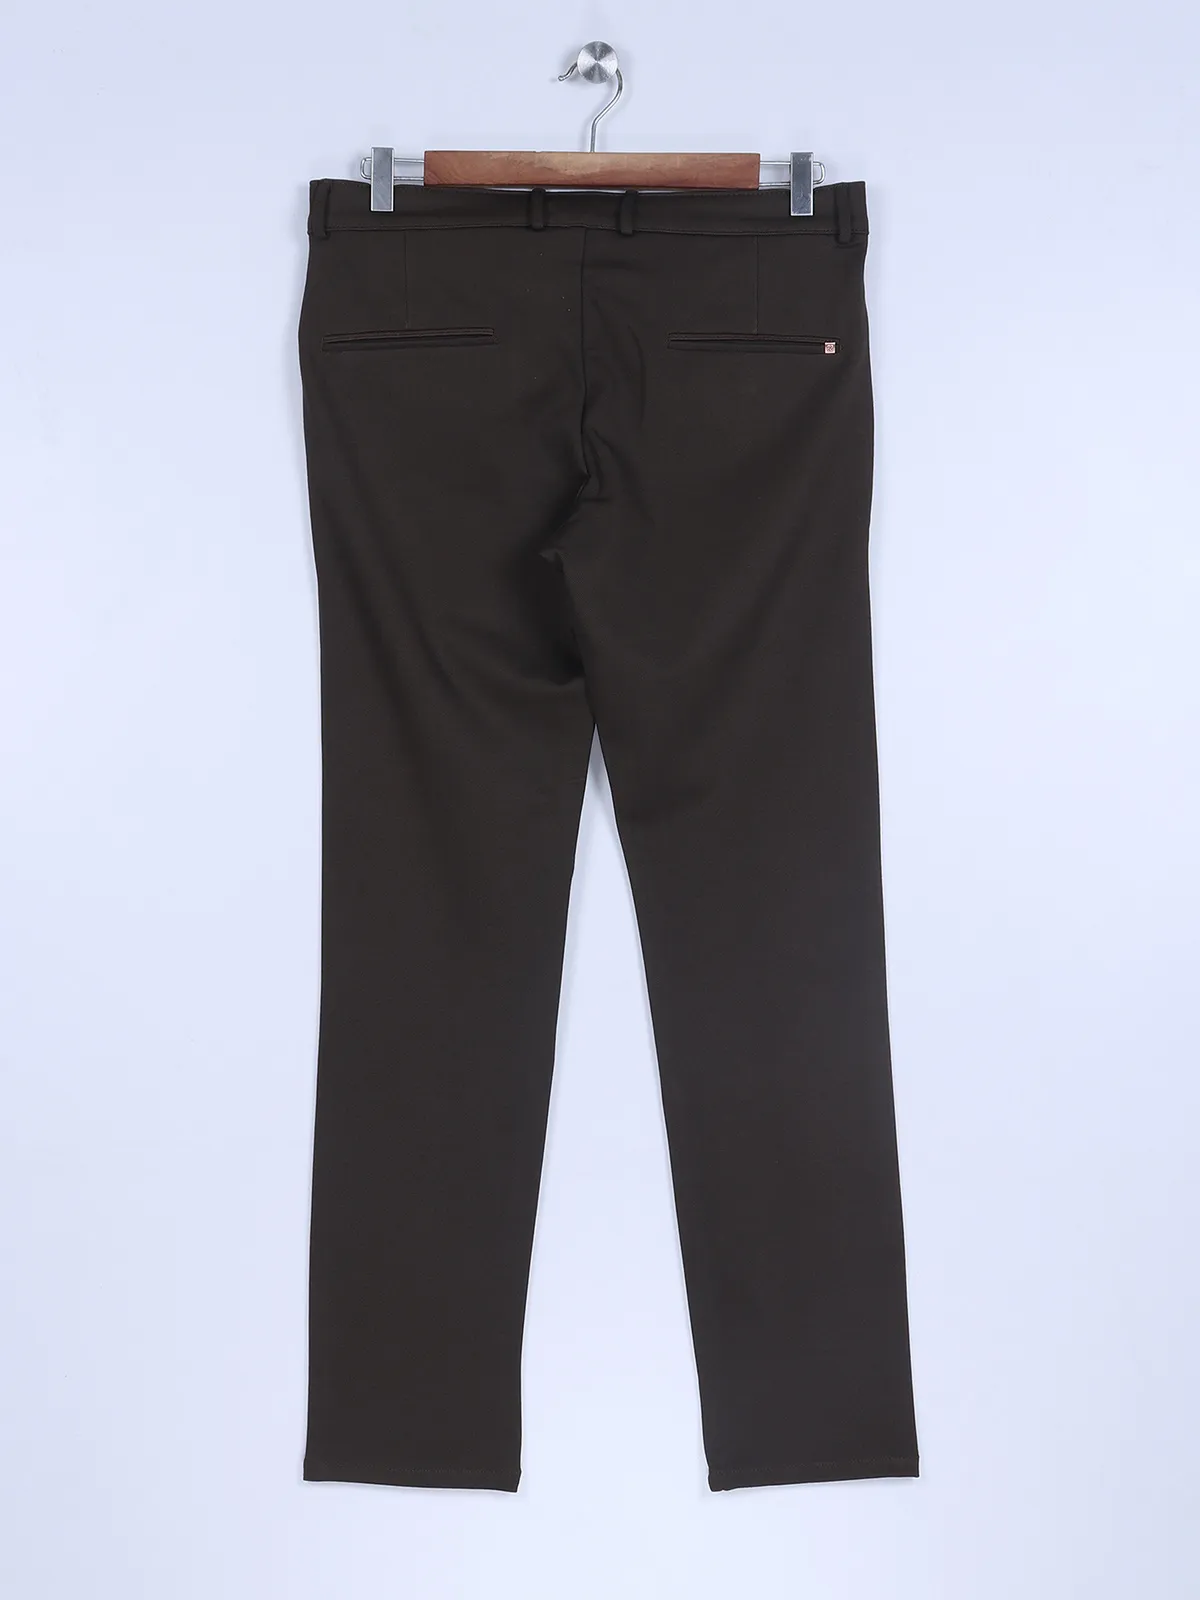 Sixth Element brown cotton trouser